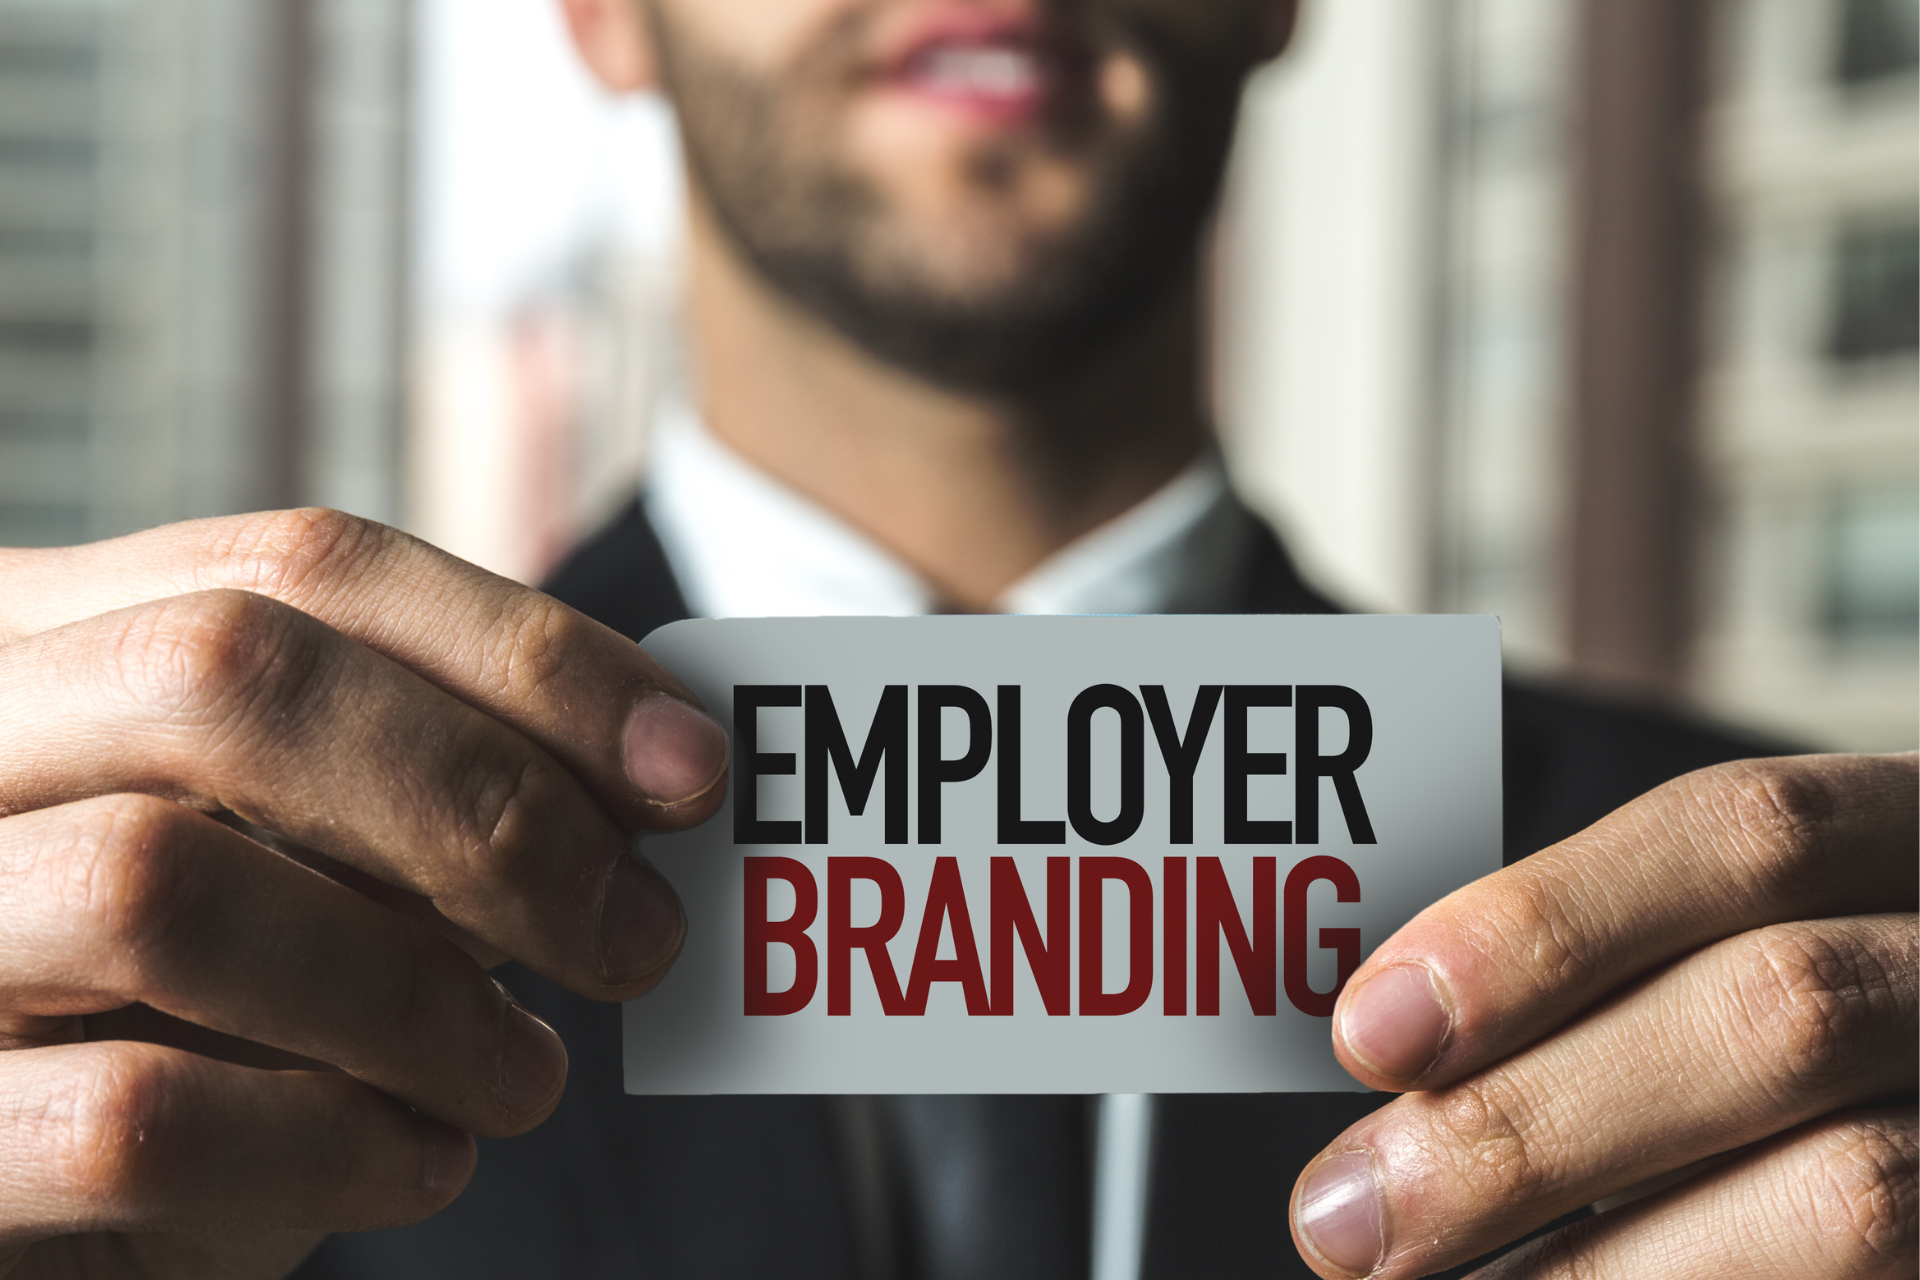 employer branding e coworking